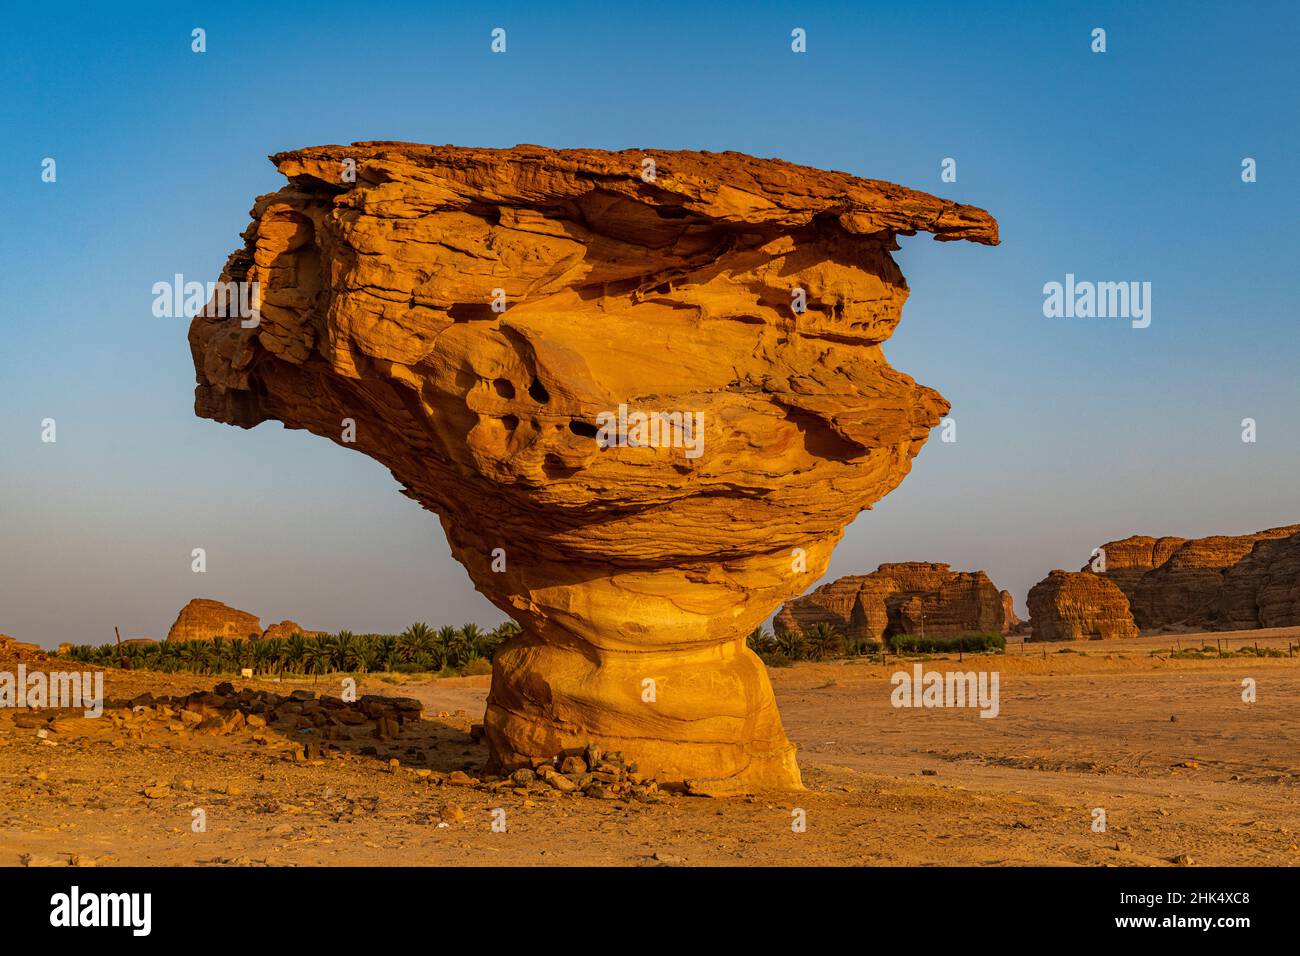 Mushroom rock, Al Ula, Kingdom of Saudi Arabia, Middle East Stock Photo